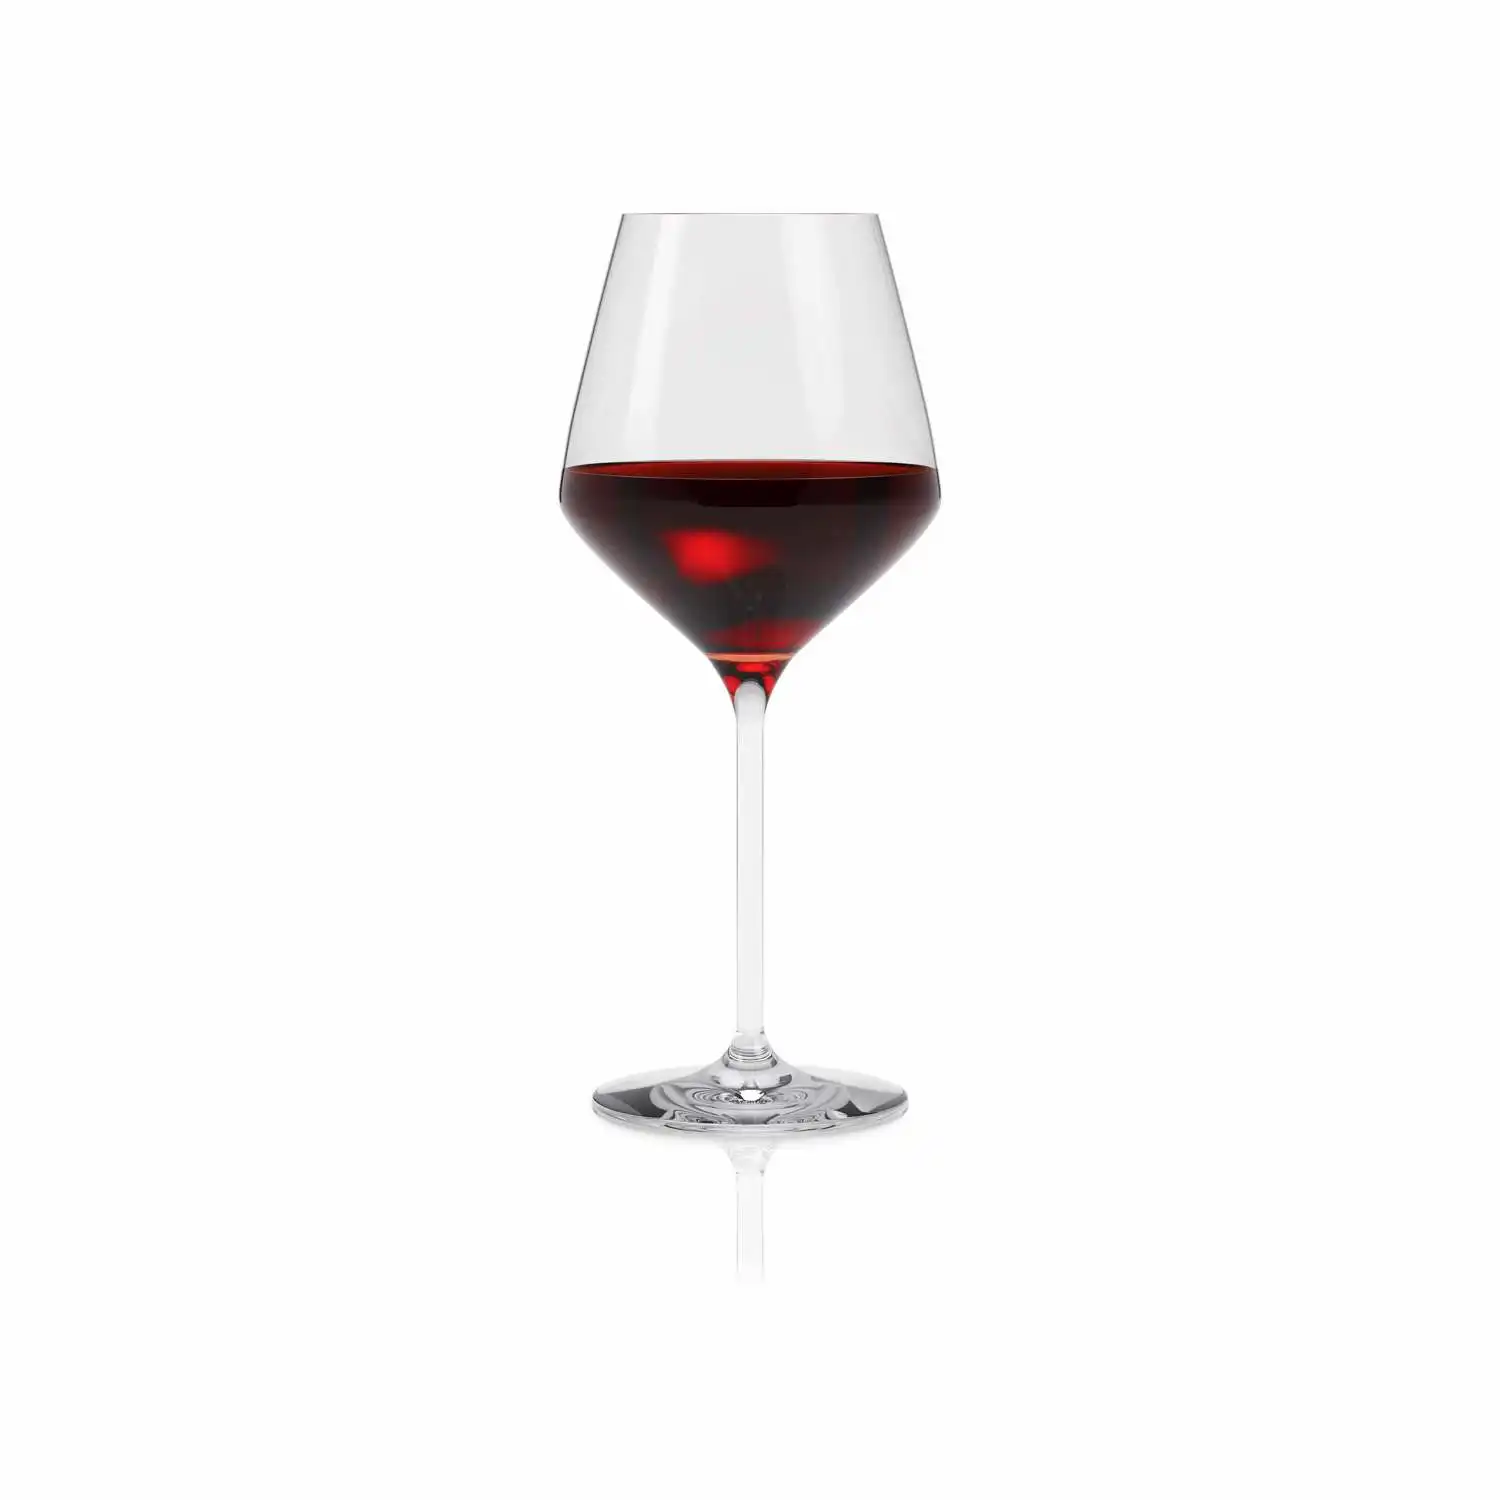 541201-red-wine-glass-legio-nova-1pcs-regi-shadow.webp